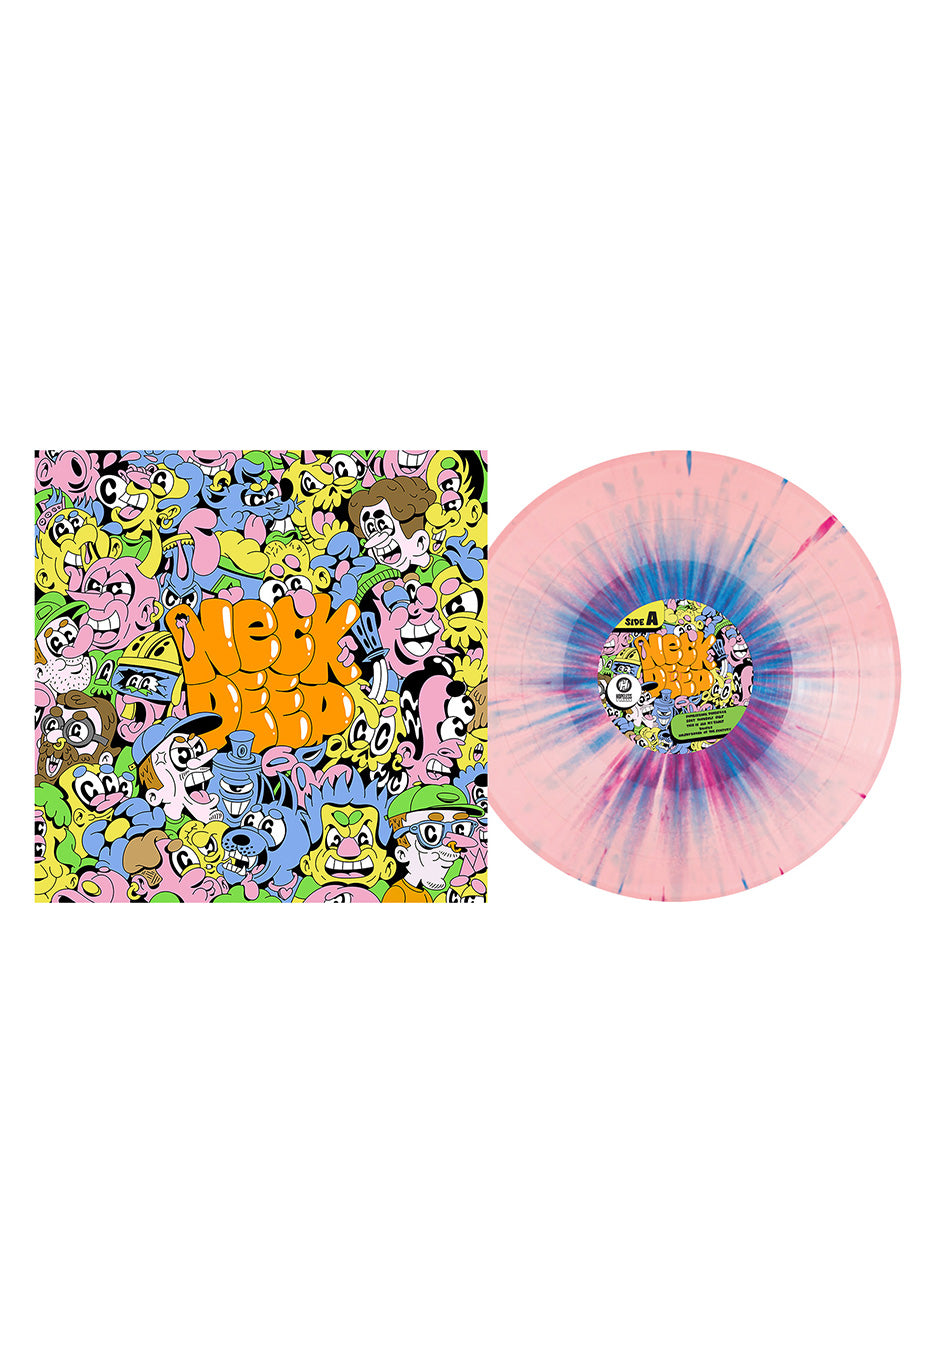 Neck Deep - Neck Deep Colored Vinyl Special Pack - Puzzle